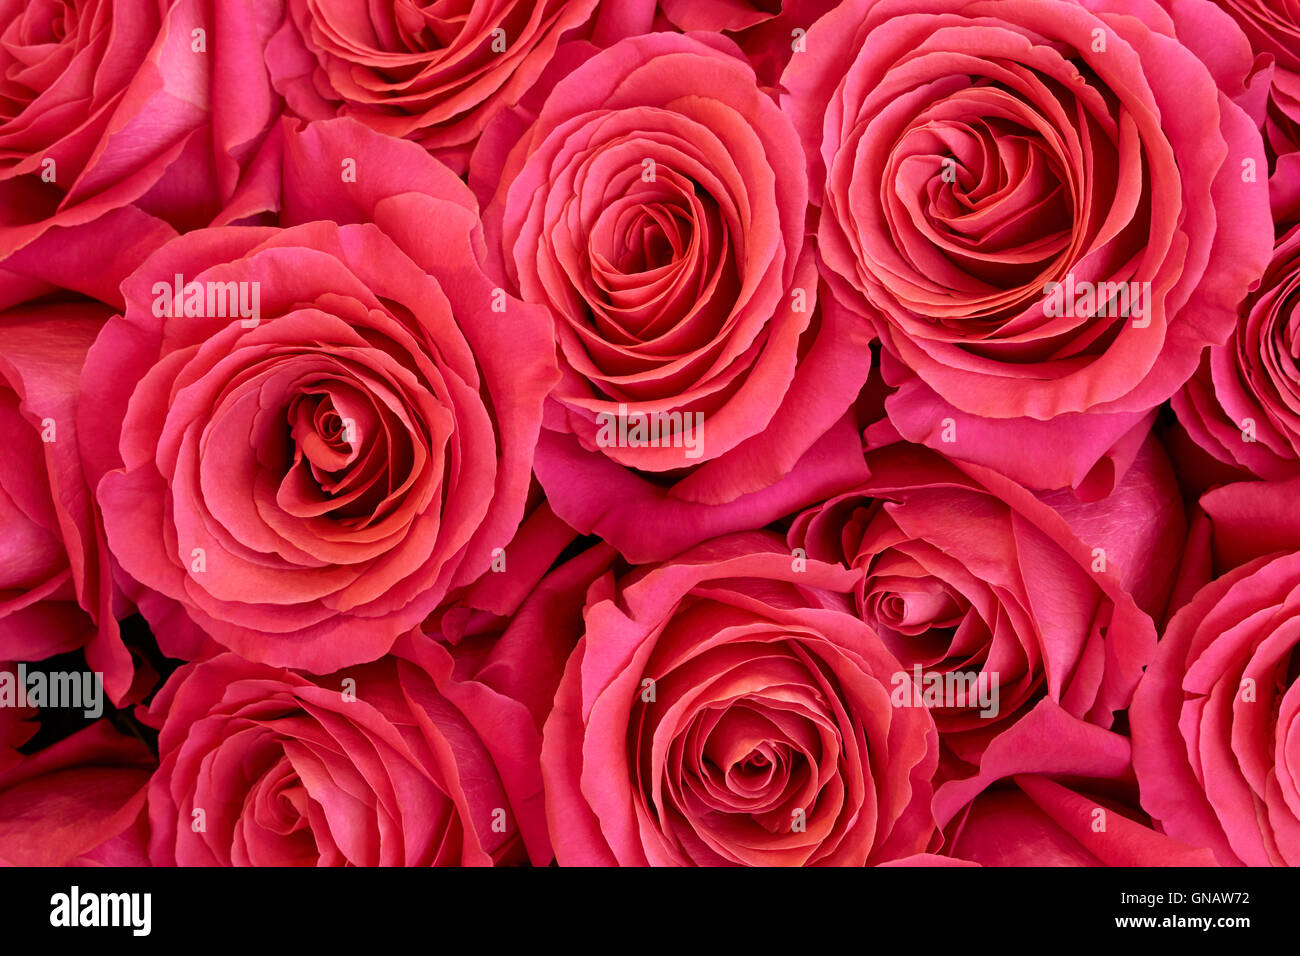 Rosas de color rosa oscuro fotografías e imágenes de alta resolución - Alamy